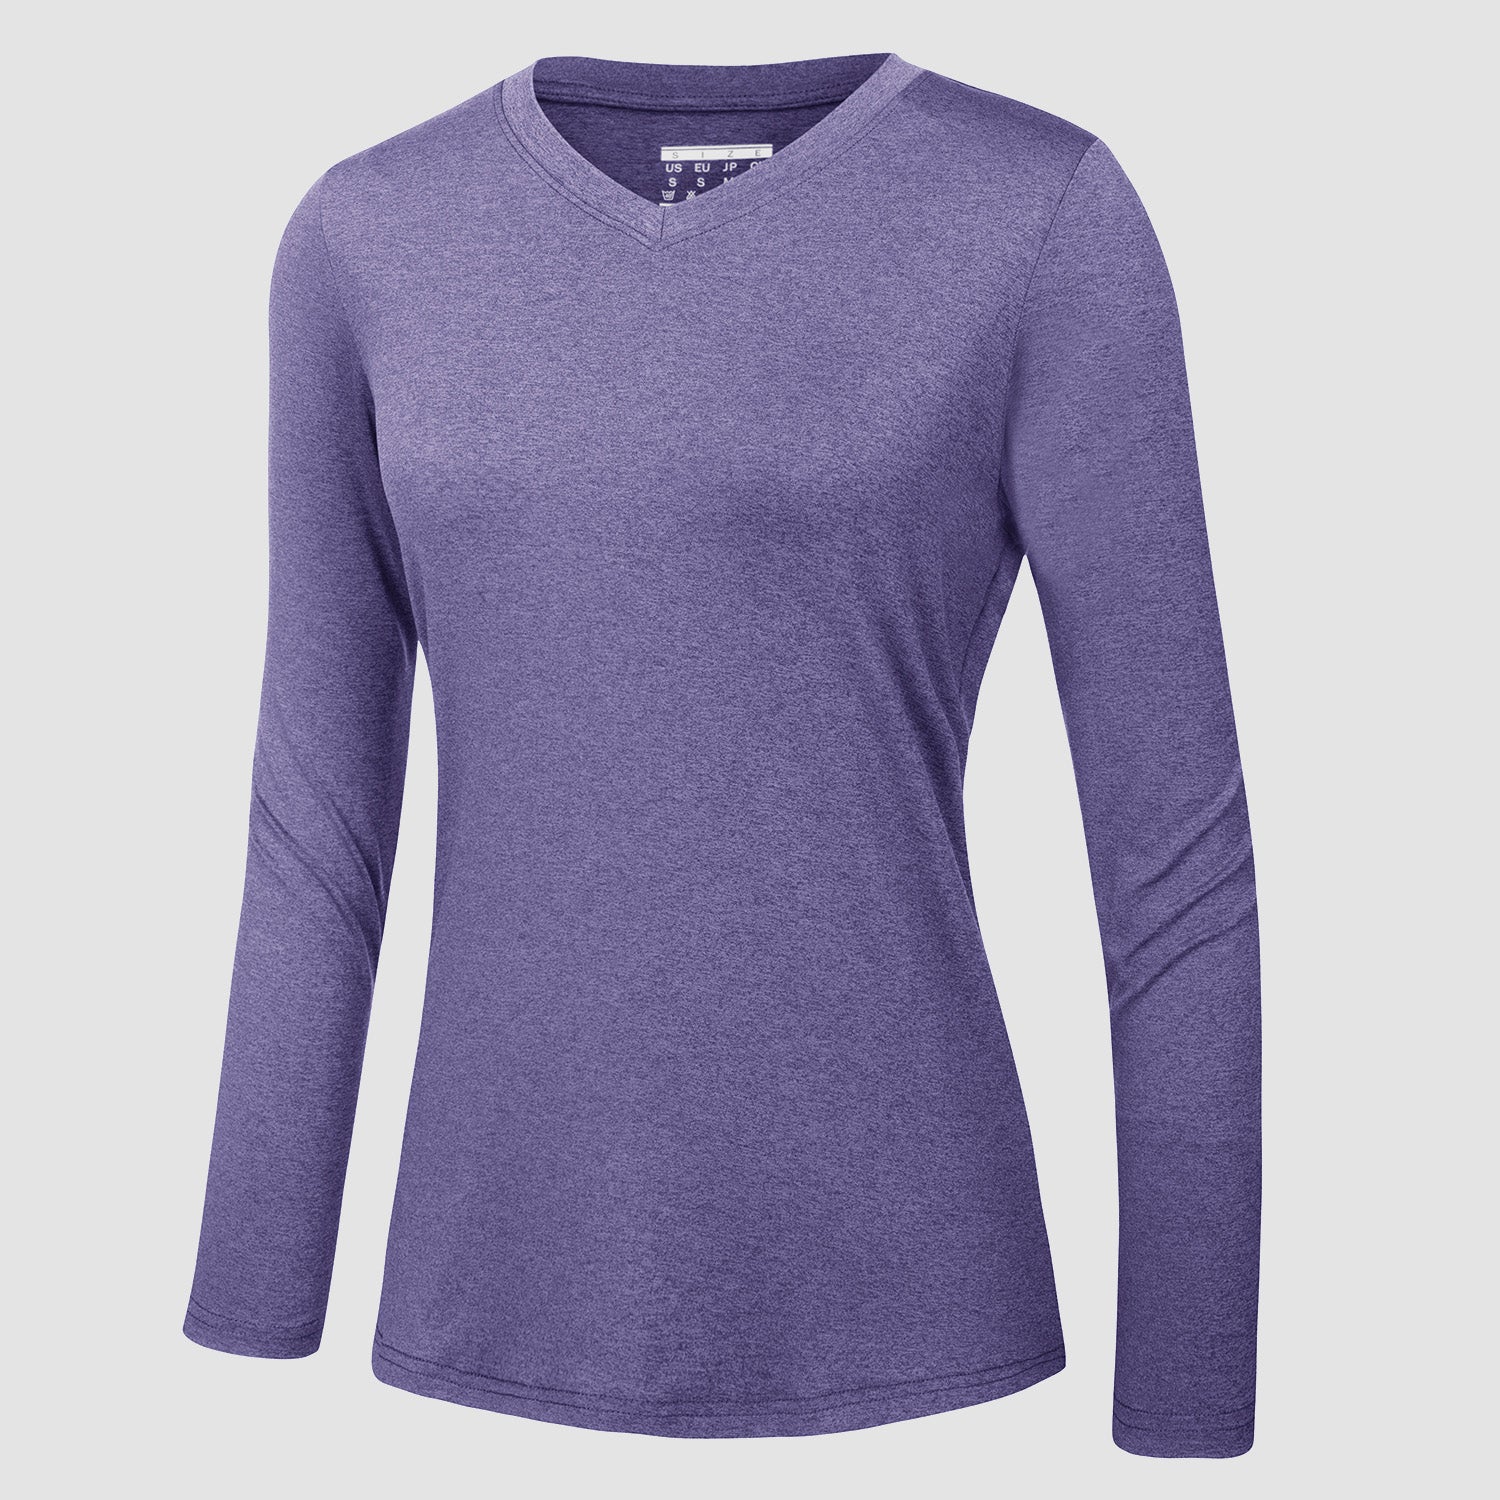 Women's Long Sleeve Shirt V Neck SPF Shirts UPF 50+ Quick Dry Workout Hiking Tee Shirts Rashguard, Violet / S